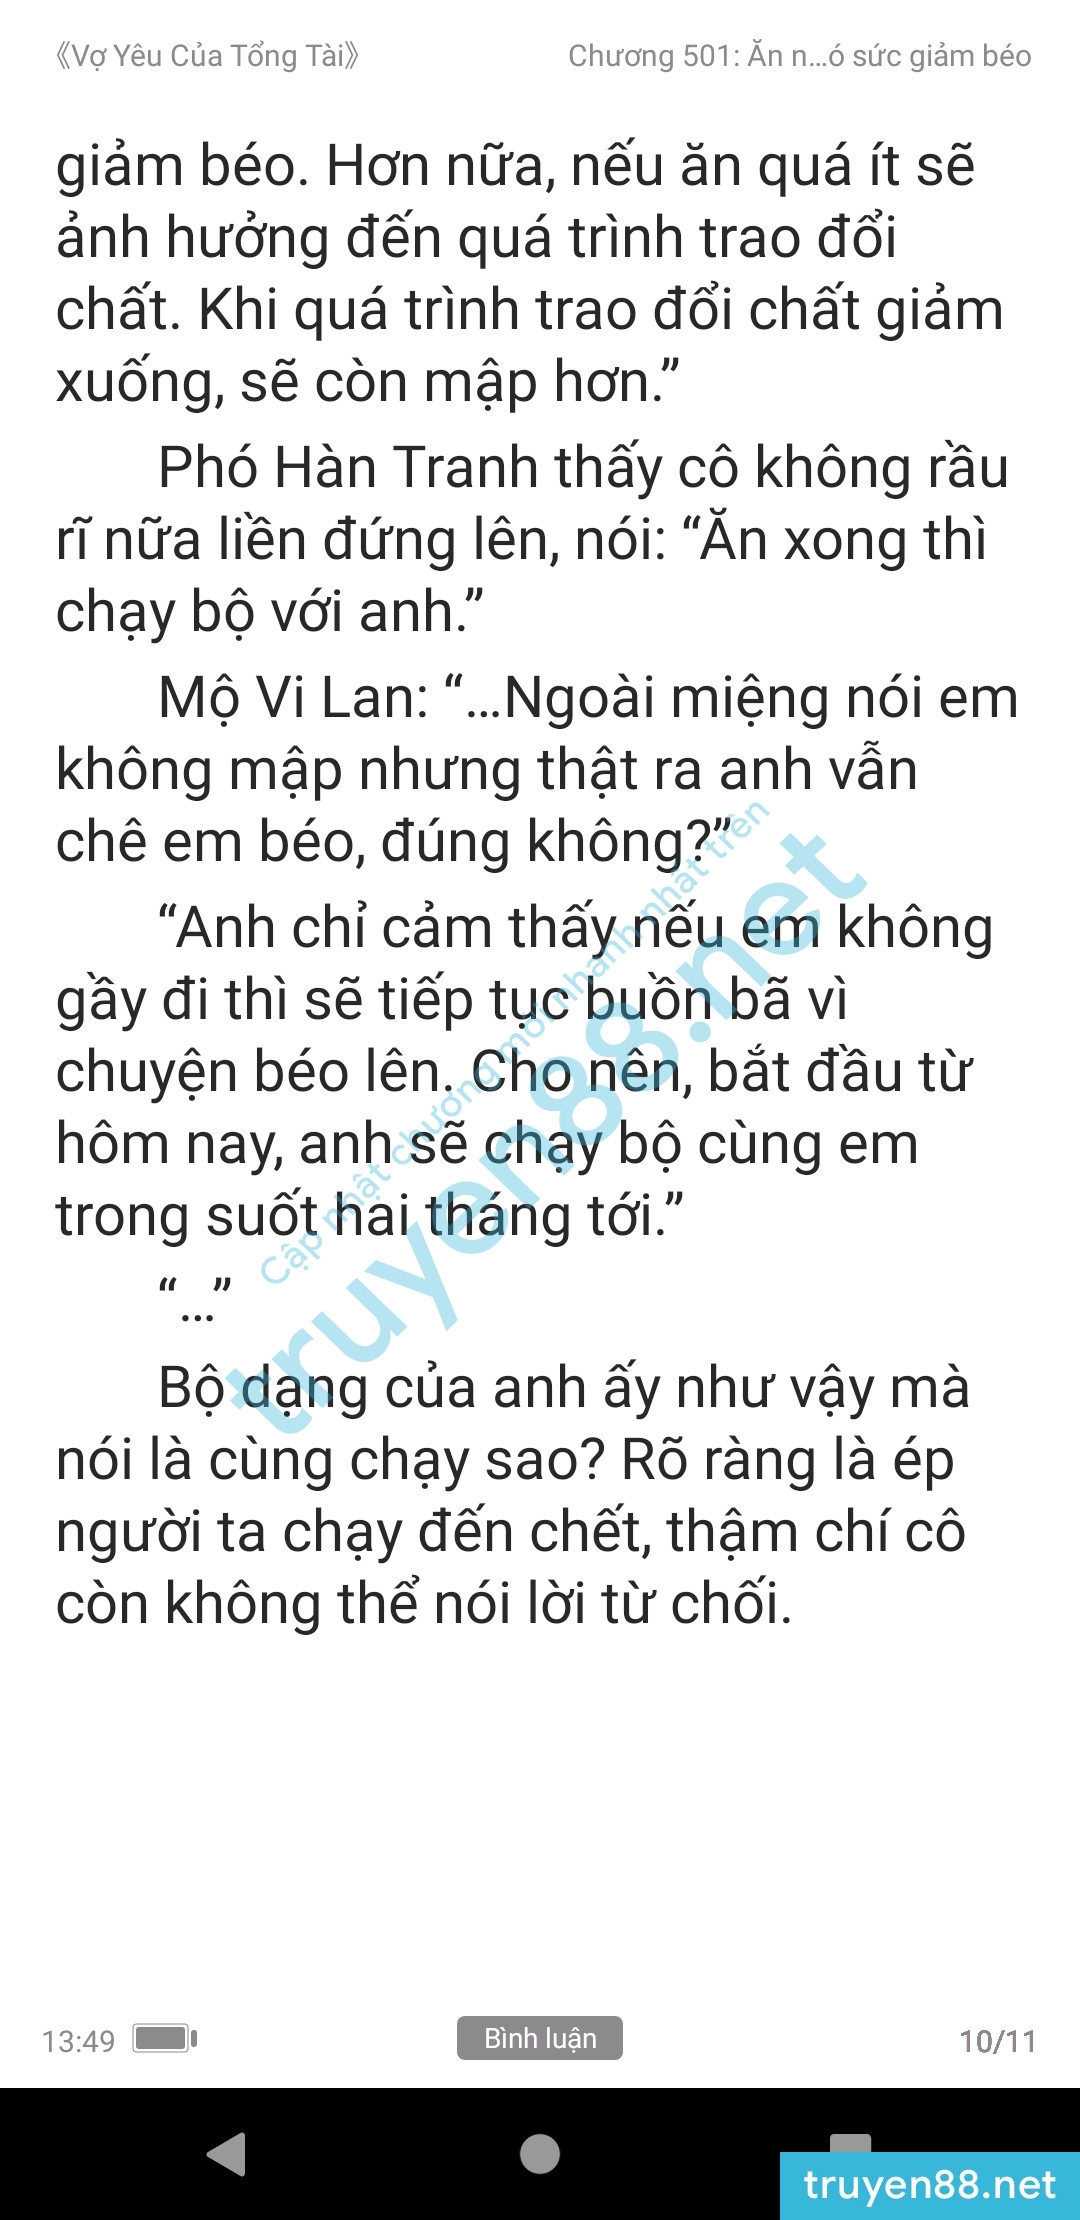 vo-yeu-cua-tong-tai-mo-vi-lan--pho-han-tranh-511-1